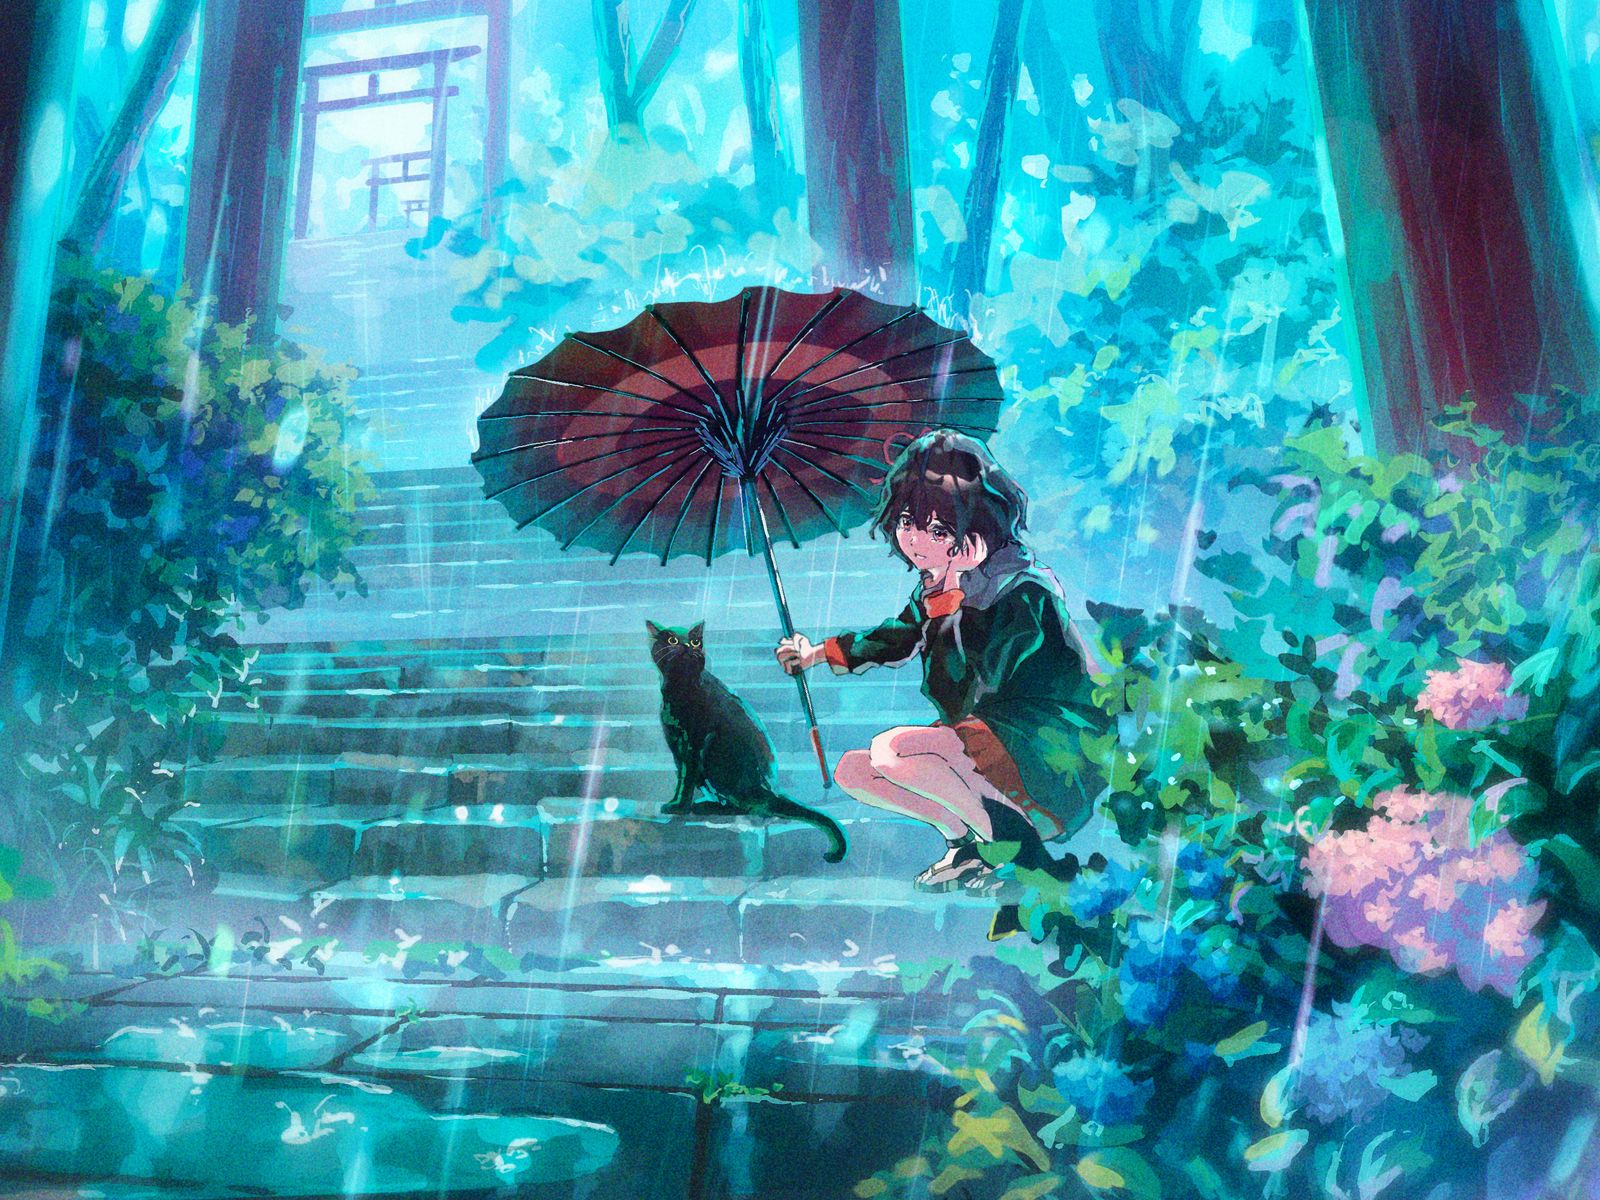 Torii Forest  Rainy  Anime Background  Illustration Stock Photo  Picture And Royalty Free Image Image 149895725